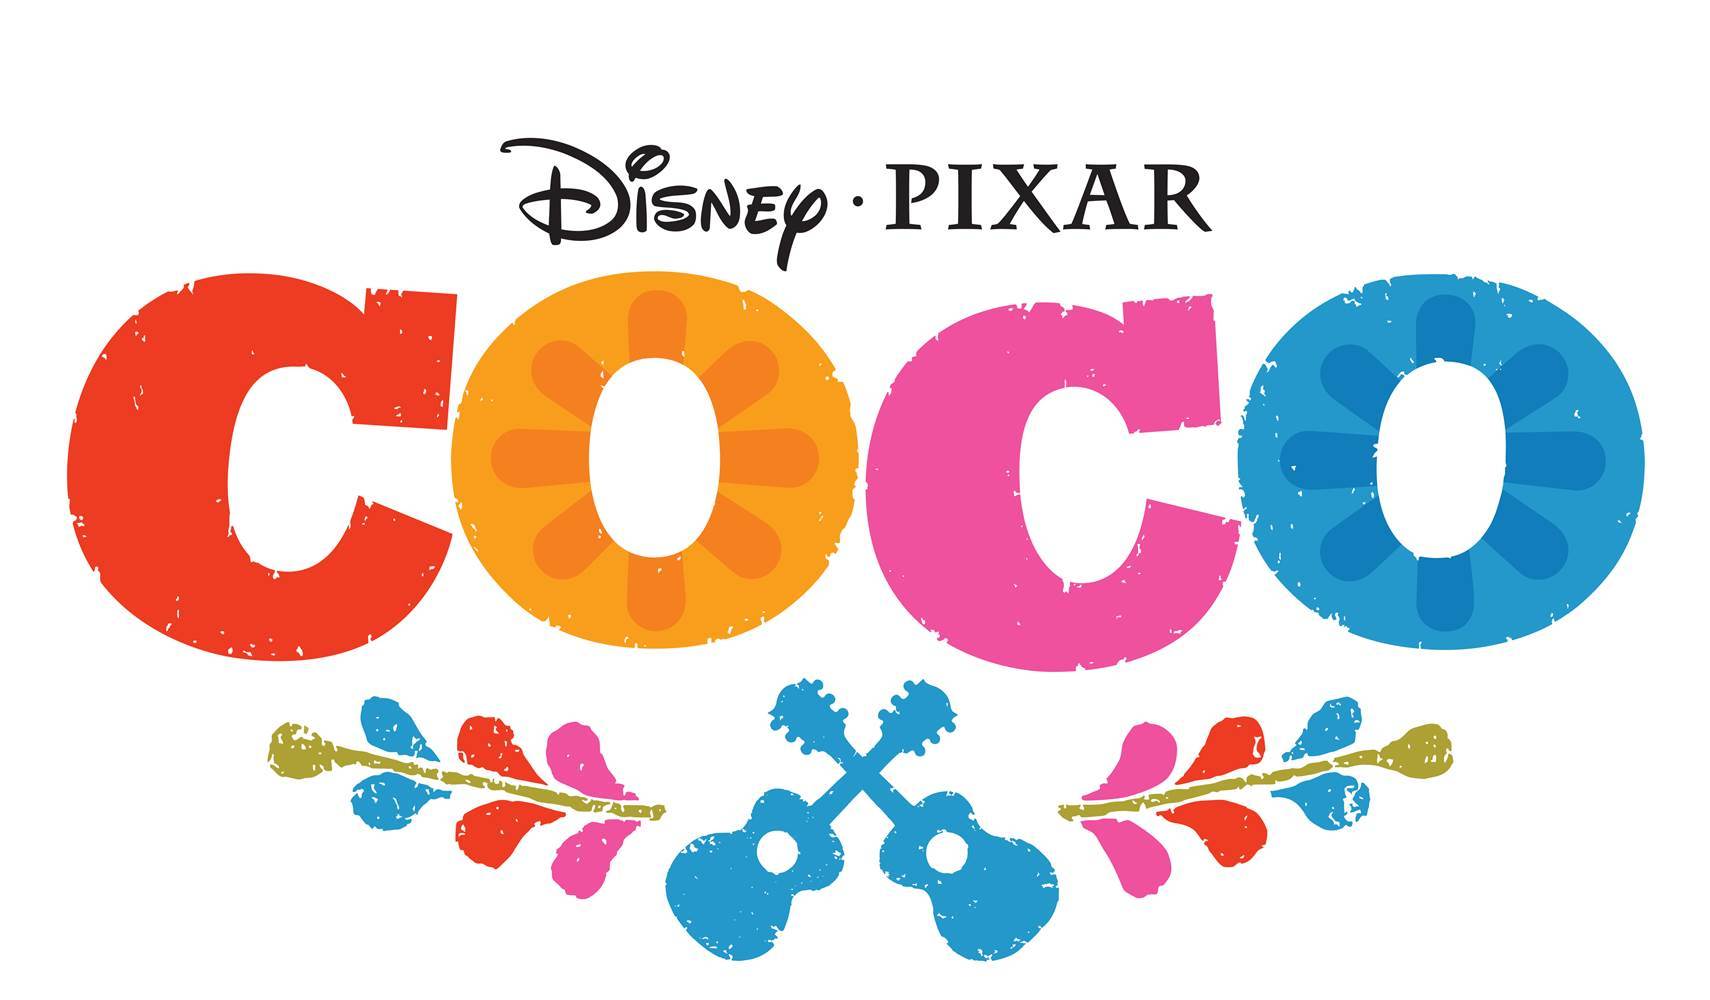 Disney Movie 2017 Logo - Coco Movie Image - first look at Miguel from Disney PIxar's 2017 film